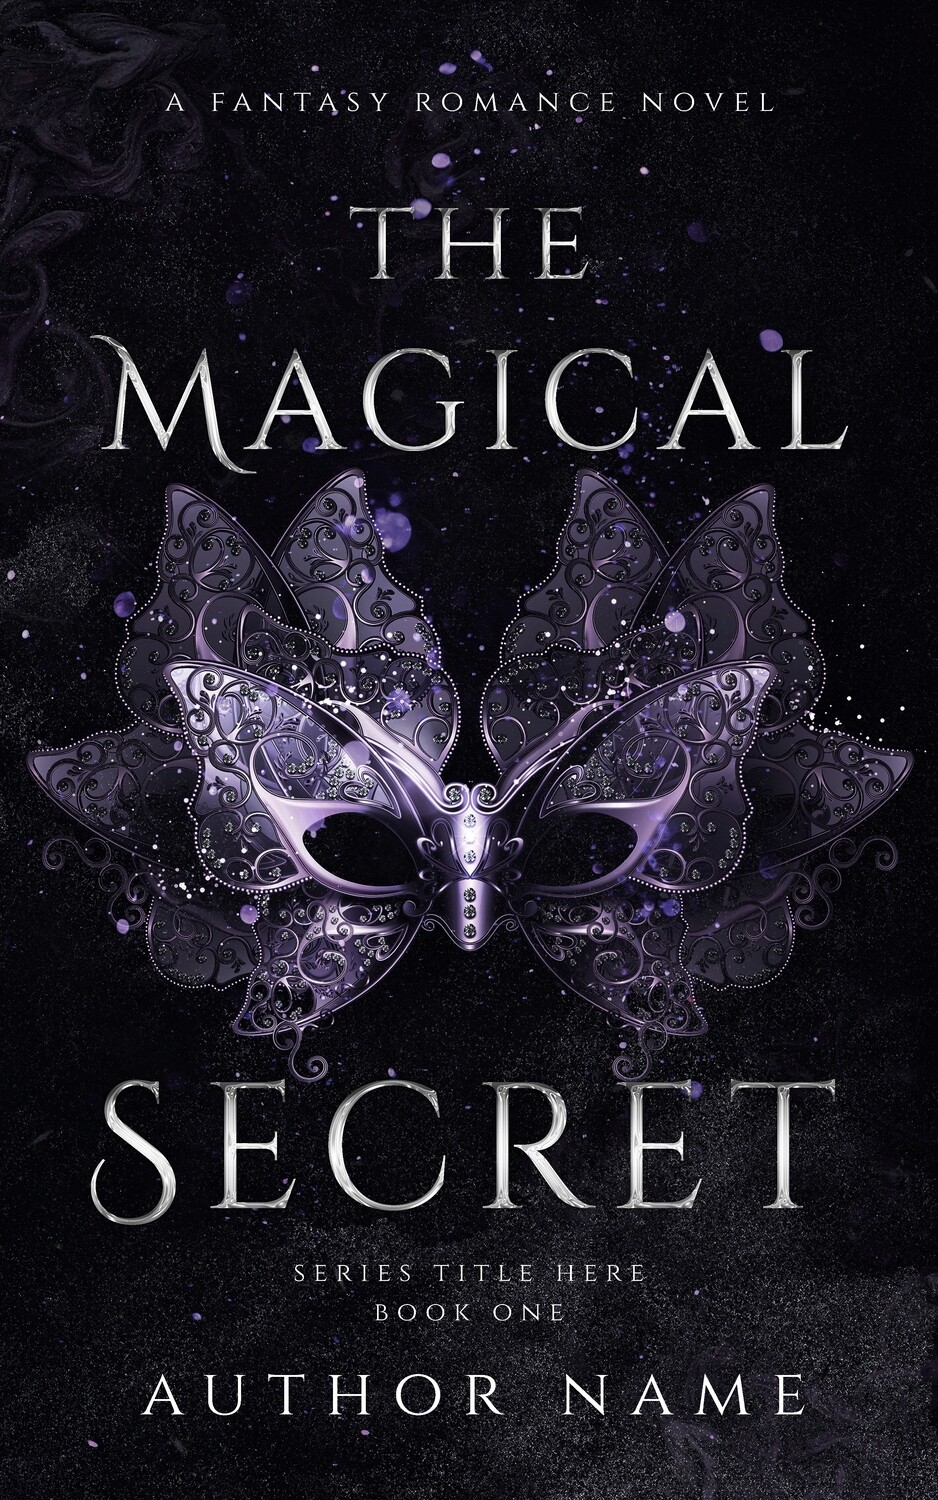 THE MAGICAL SECRET